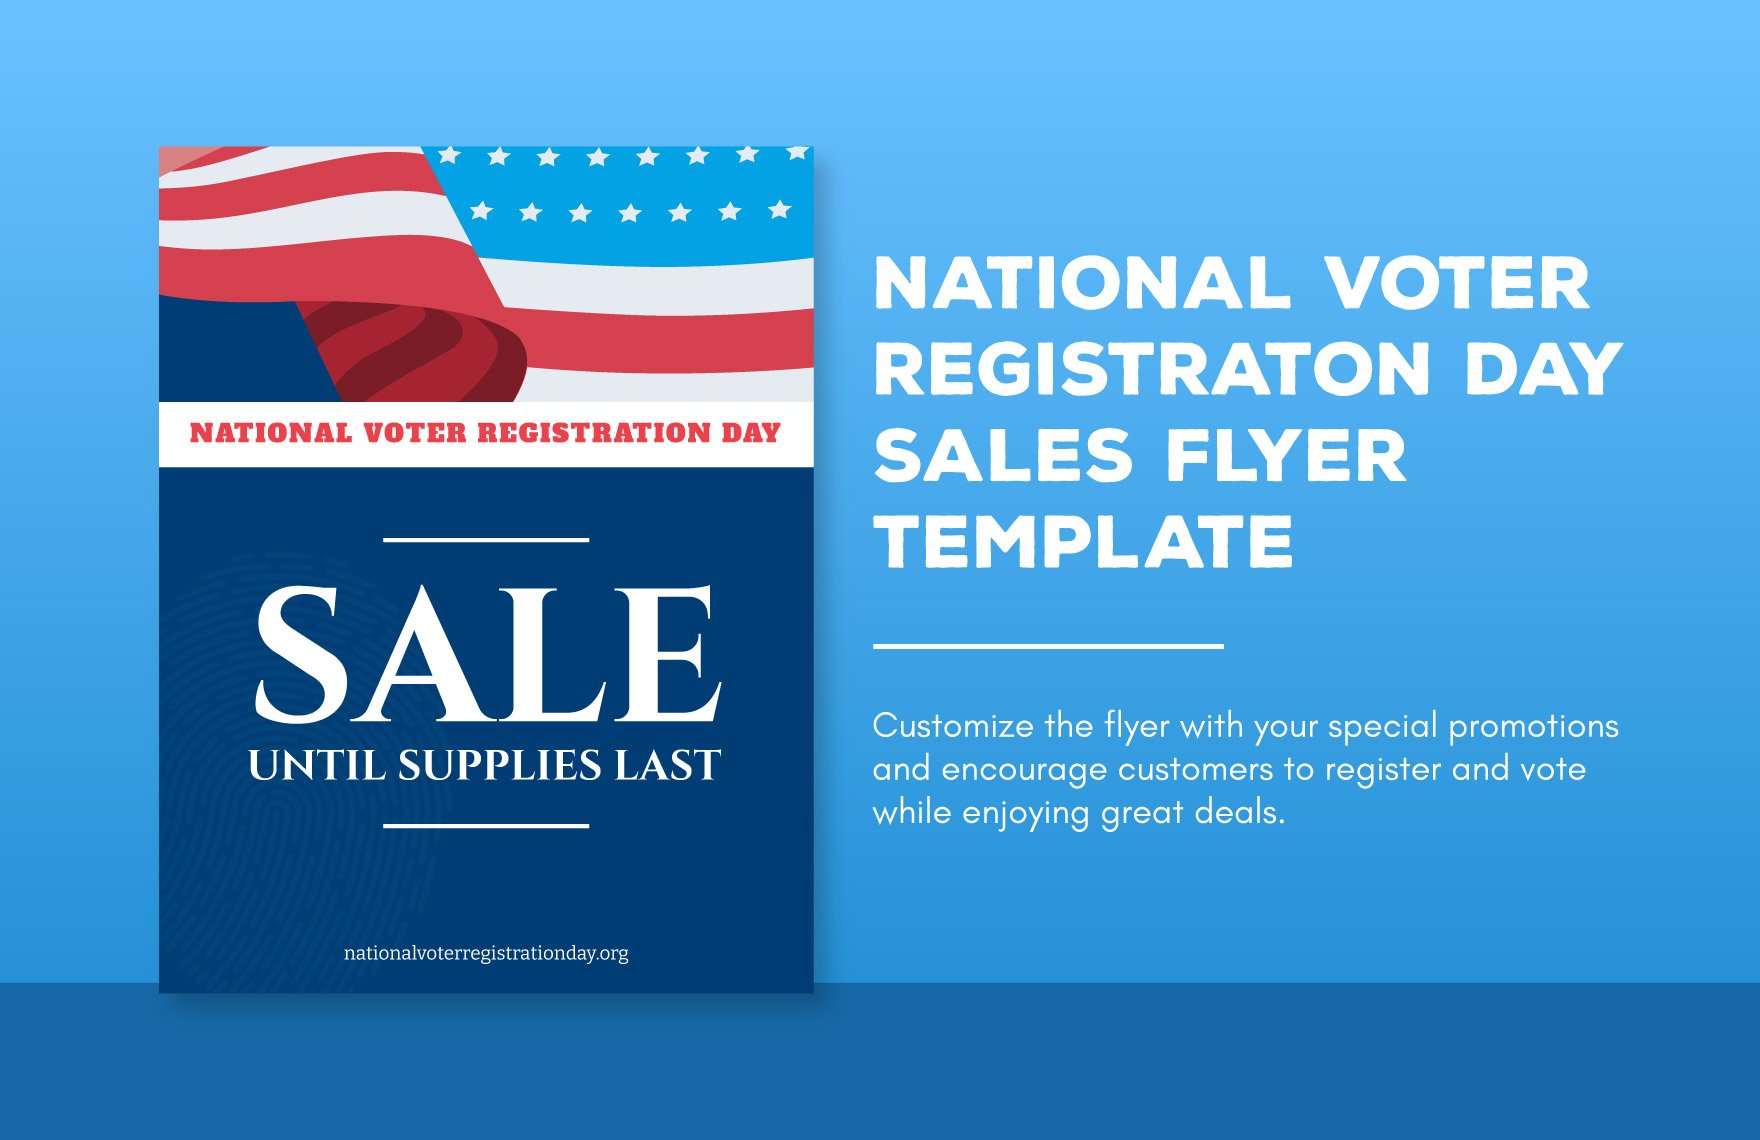 Free National Voter Registration Day Sales Flyer Template in Illustrator, PSD, PNG